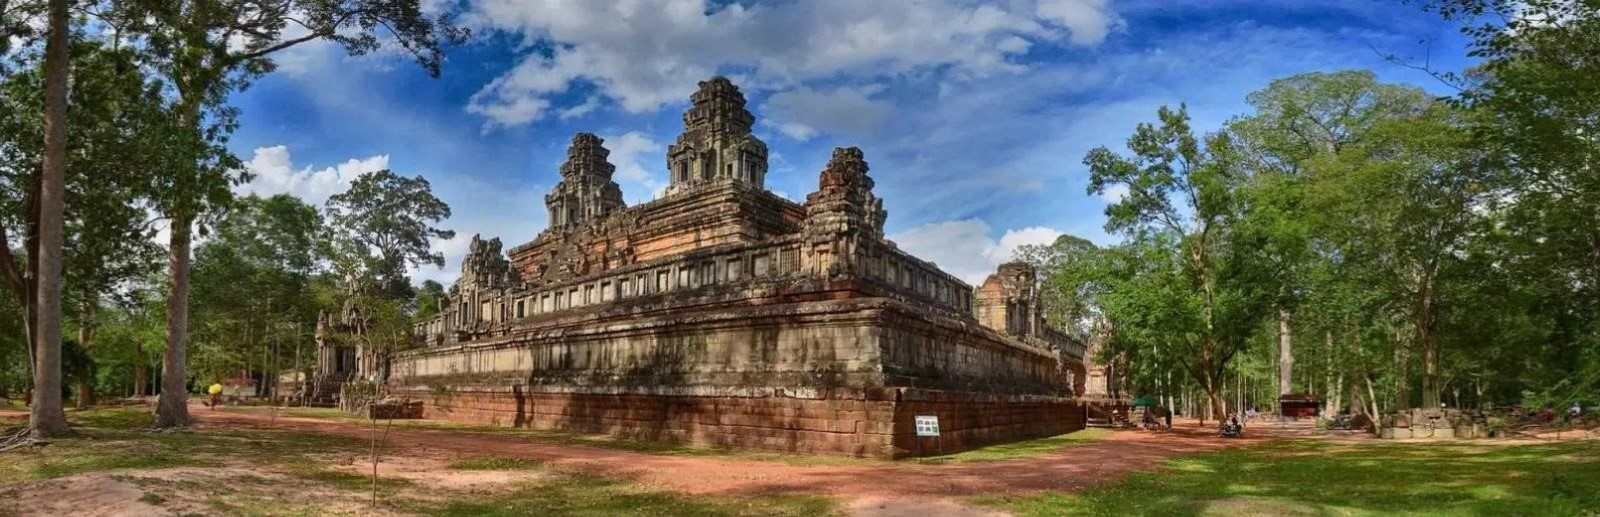 Voyage et transports au Cambodge.jpg